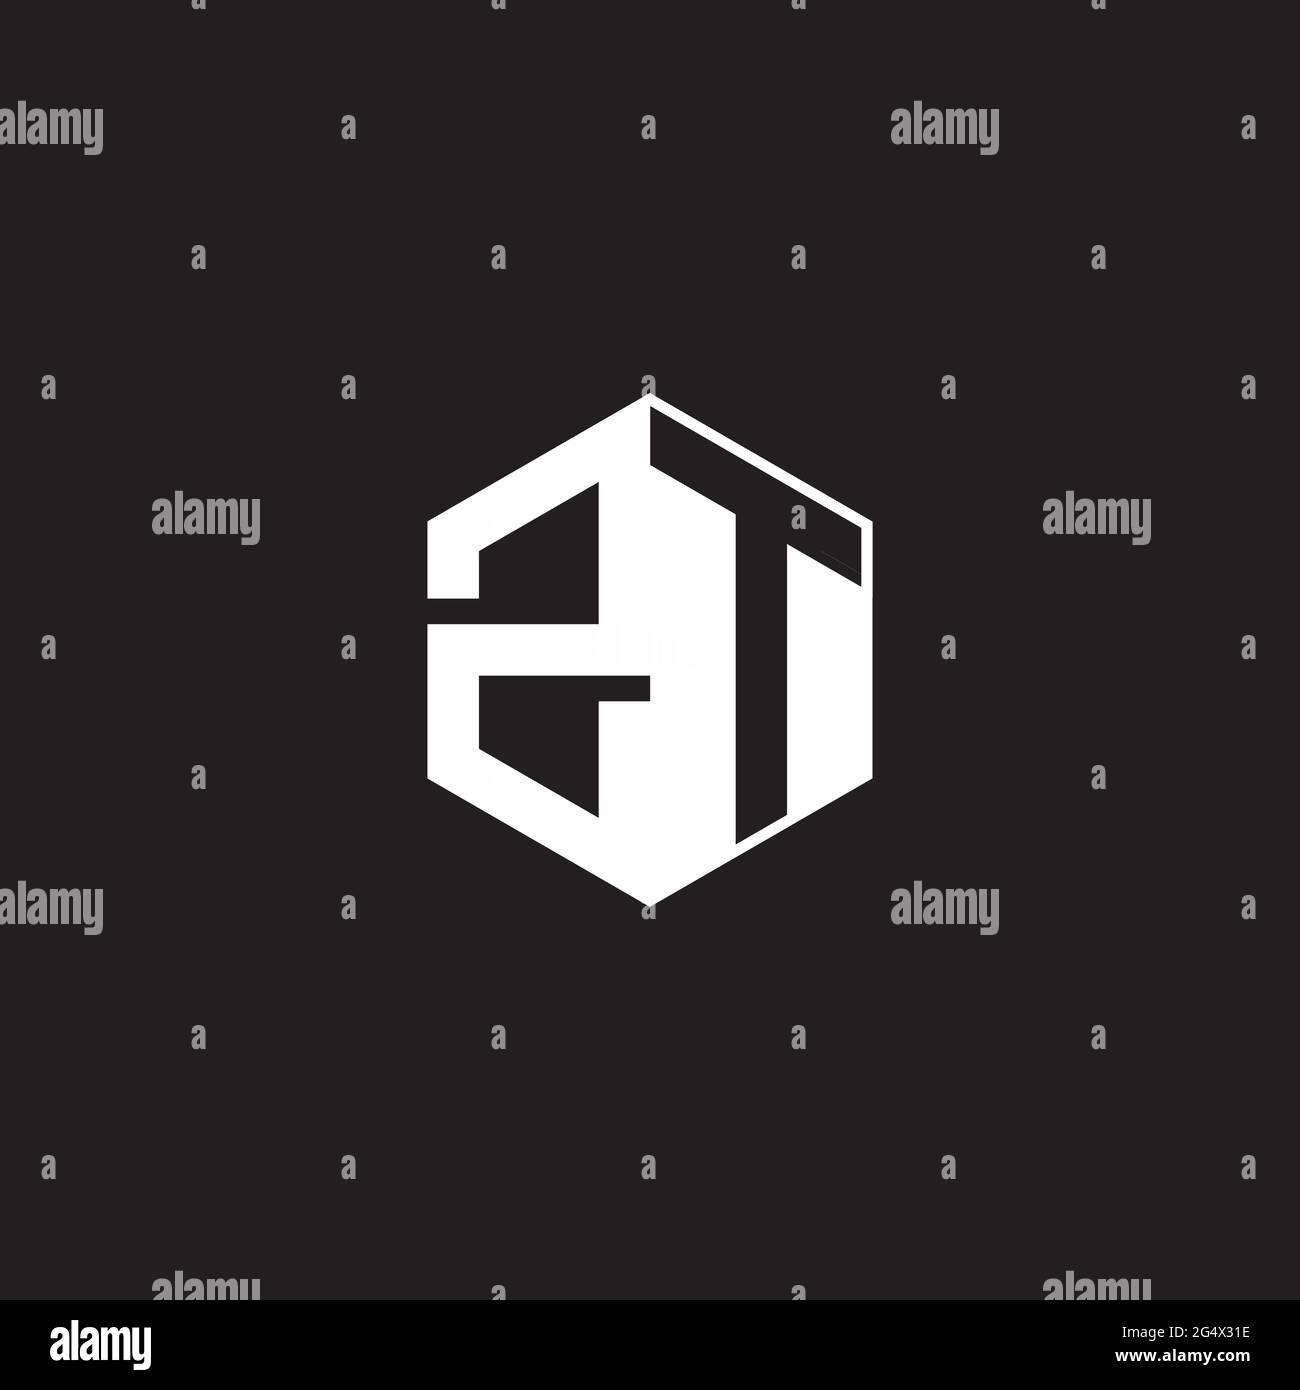 ZT Z T TZ Logo monogram hexagon with black background negative space ...